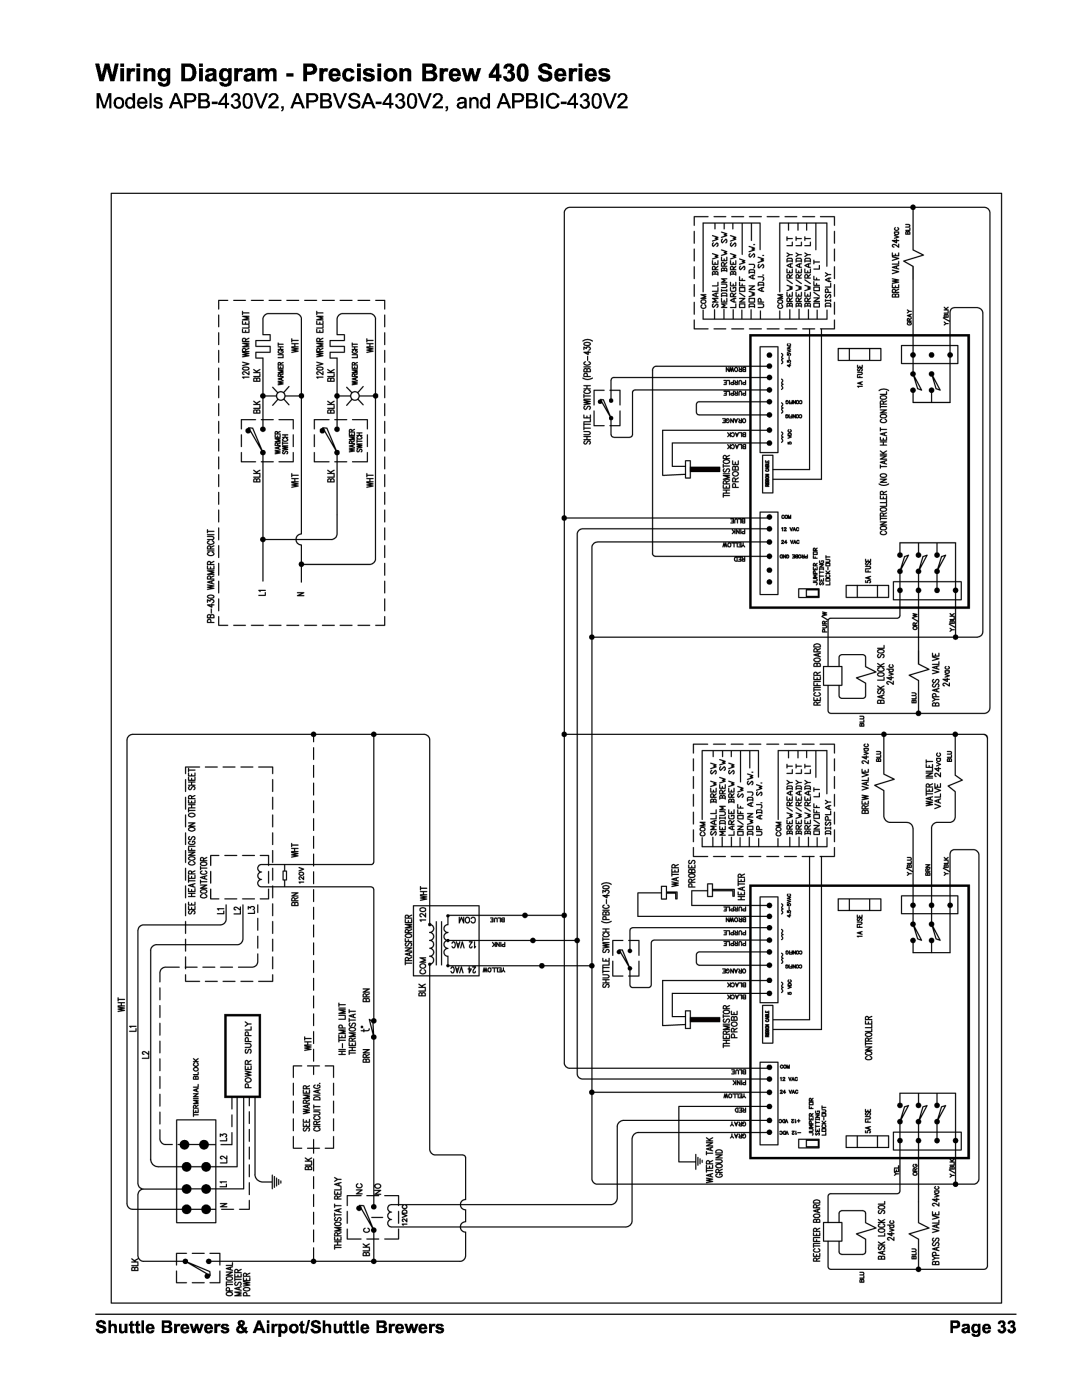 Grindmaster Wiring Diagram - Precision Brew 430 Series, Models APB-430V2, APBVSA-430V2, and APBIC-430V2, Page 